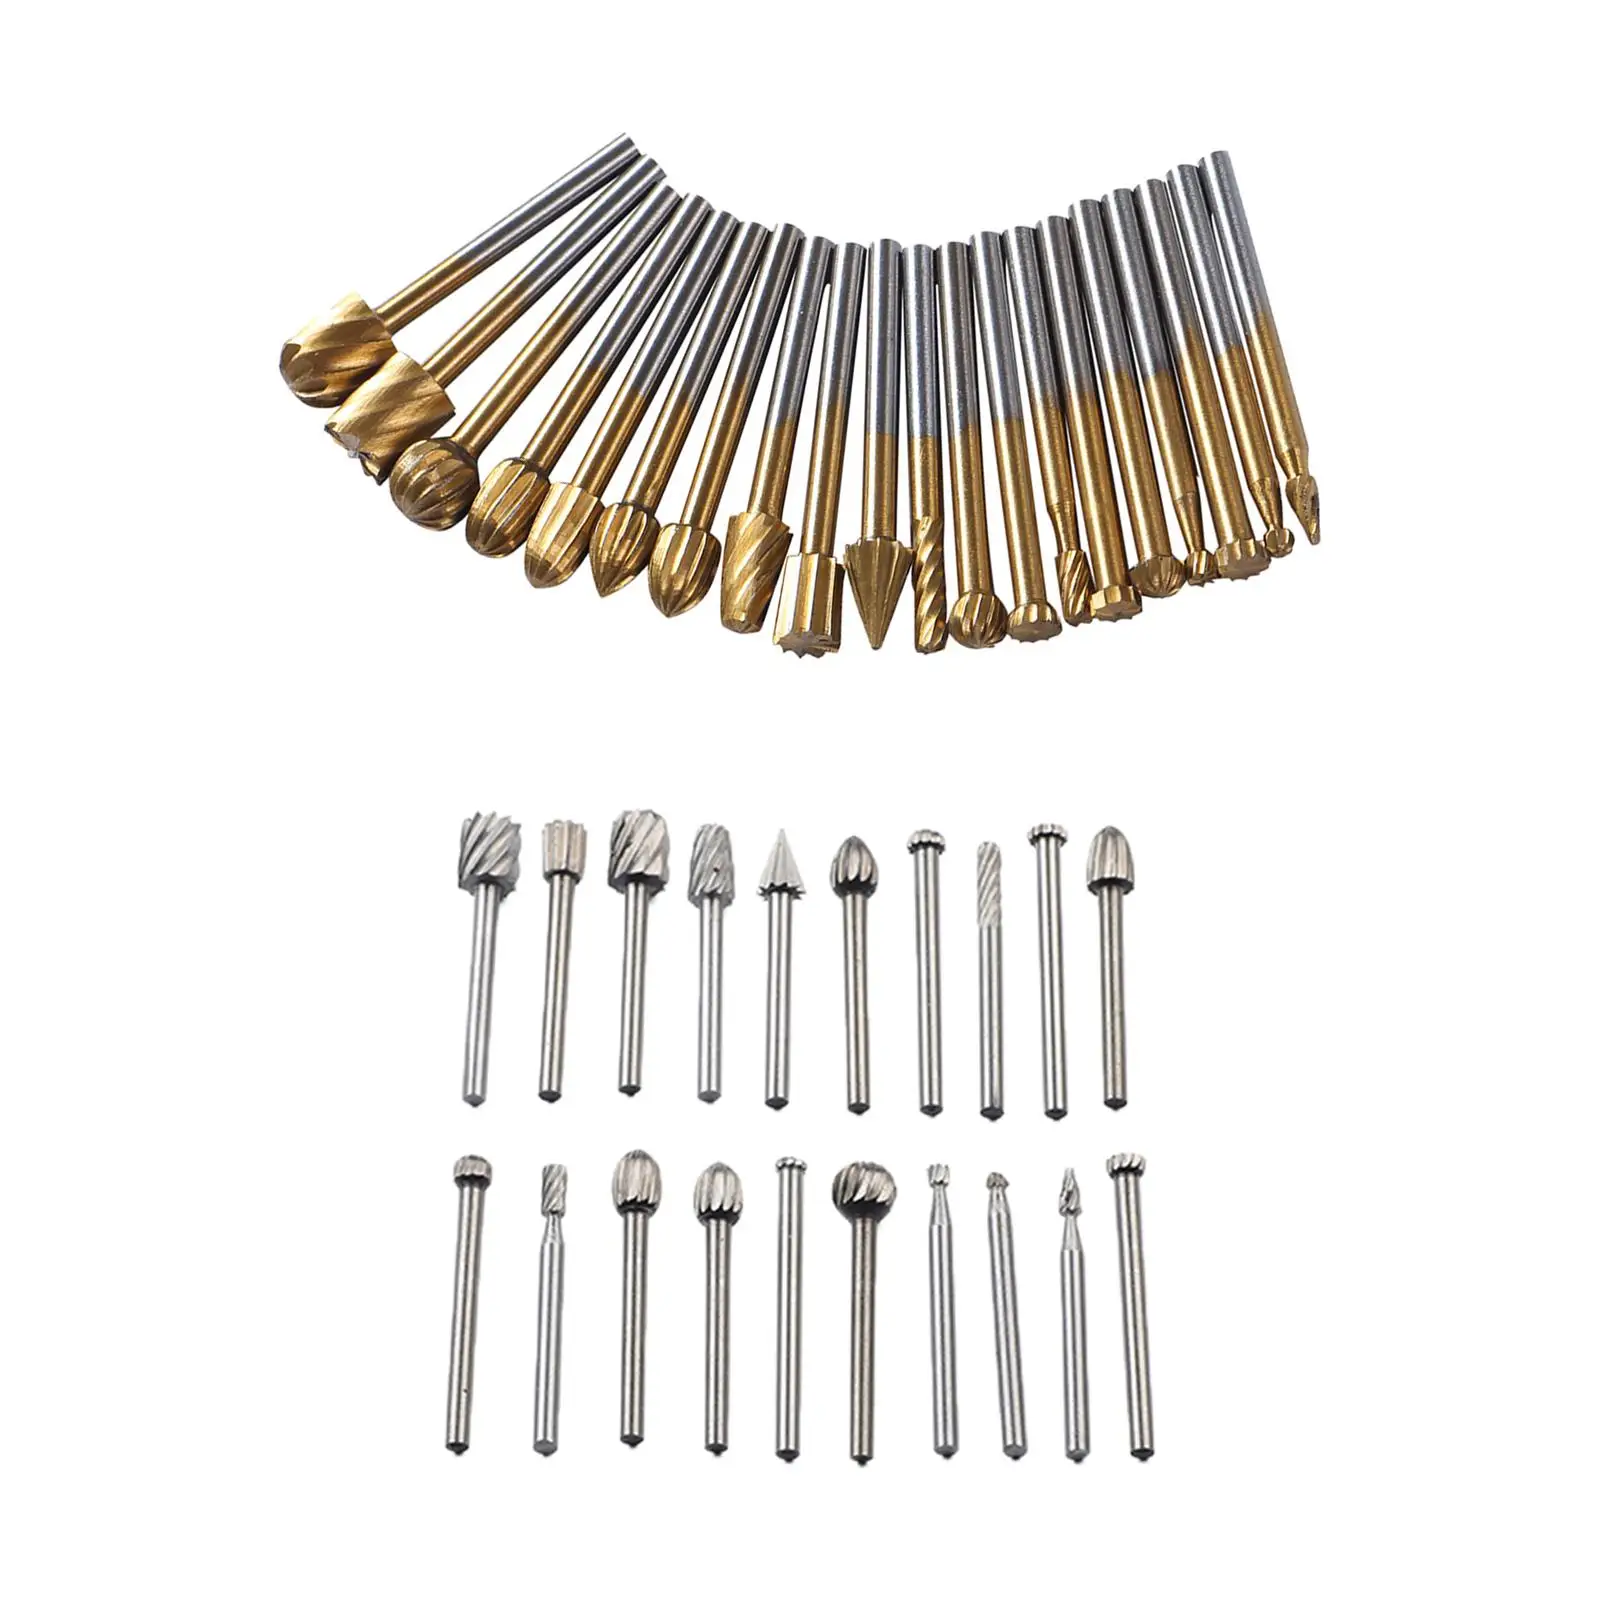 20x Rotary Drill Set, Metal Grinding Rasp Drill Polishing Rotary Tools for Polishing Steel and Wood Working DIY Ceramics Jewelry